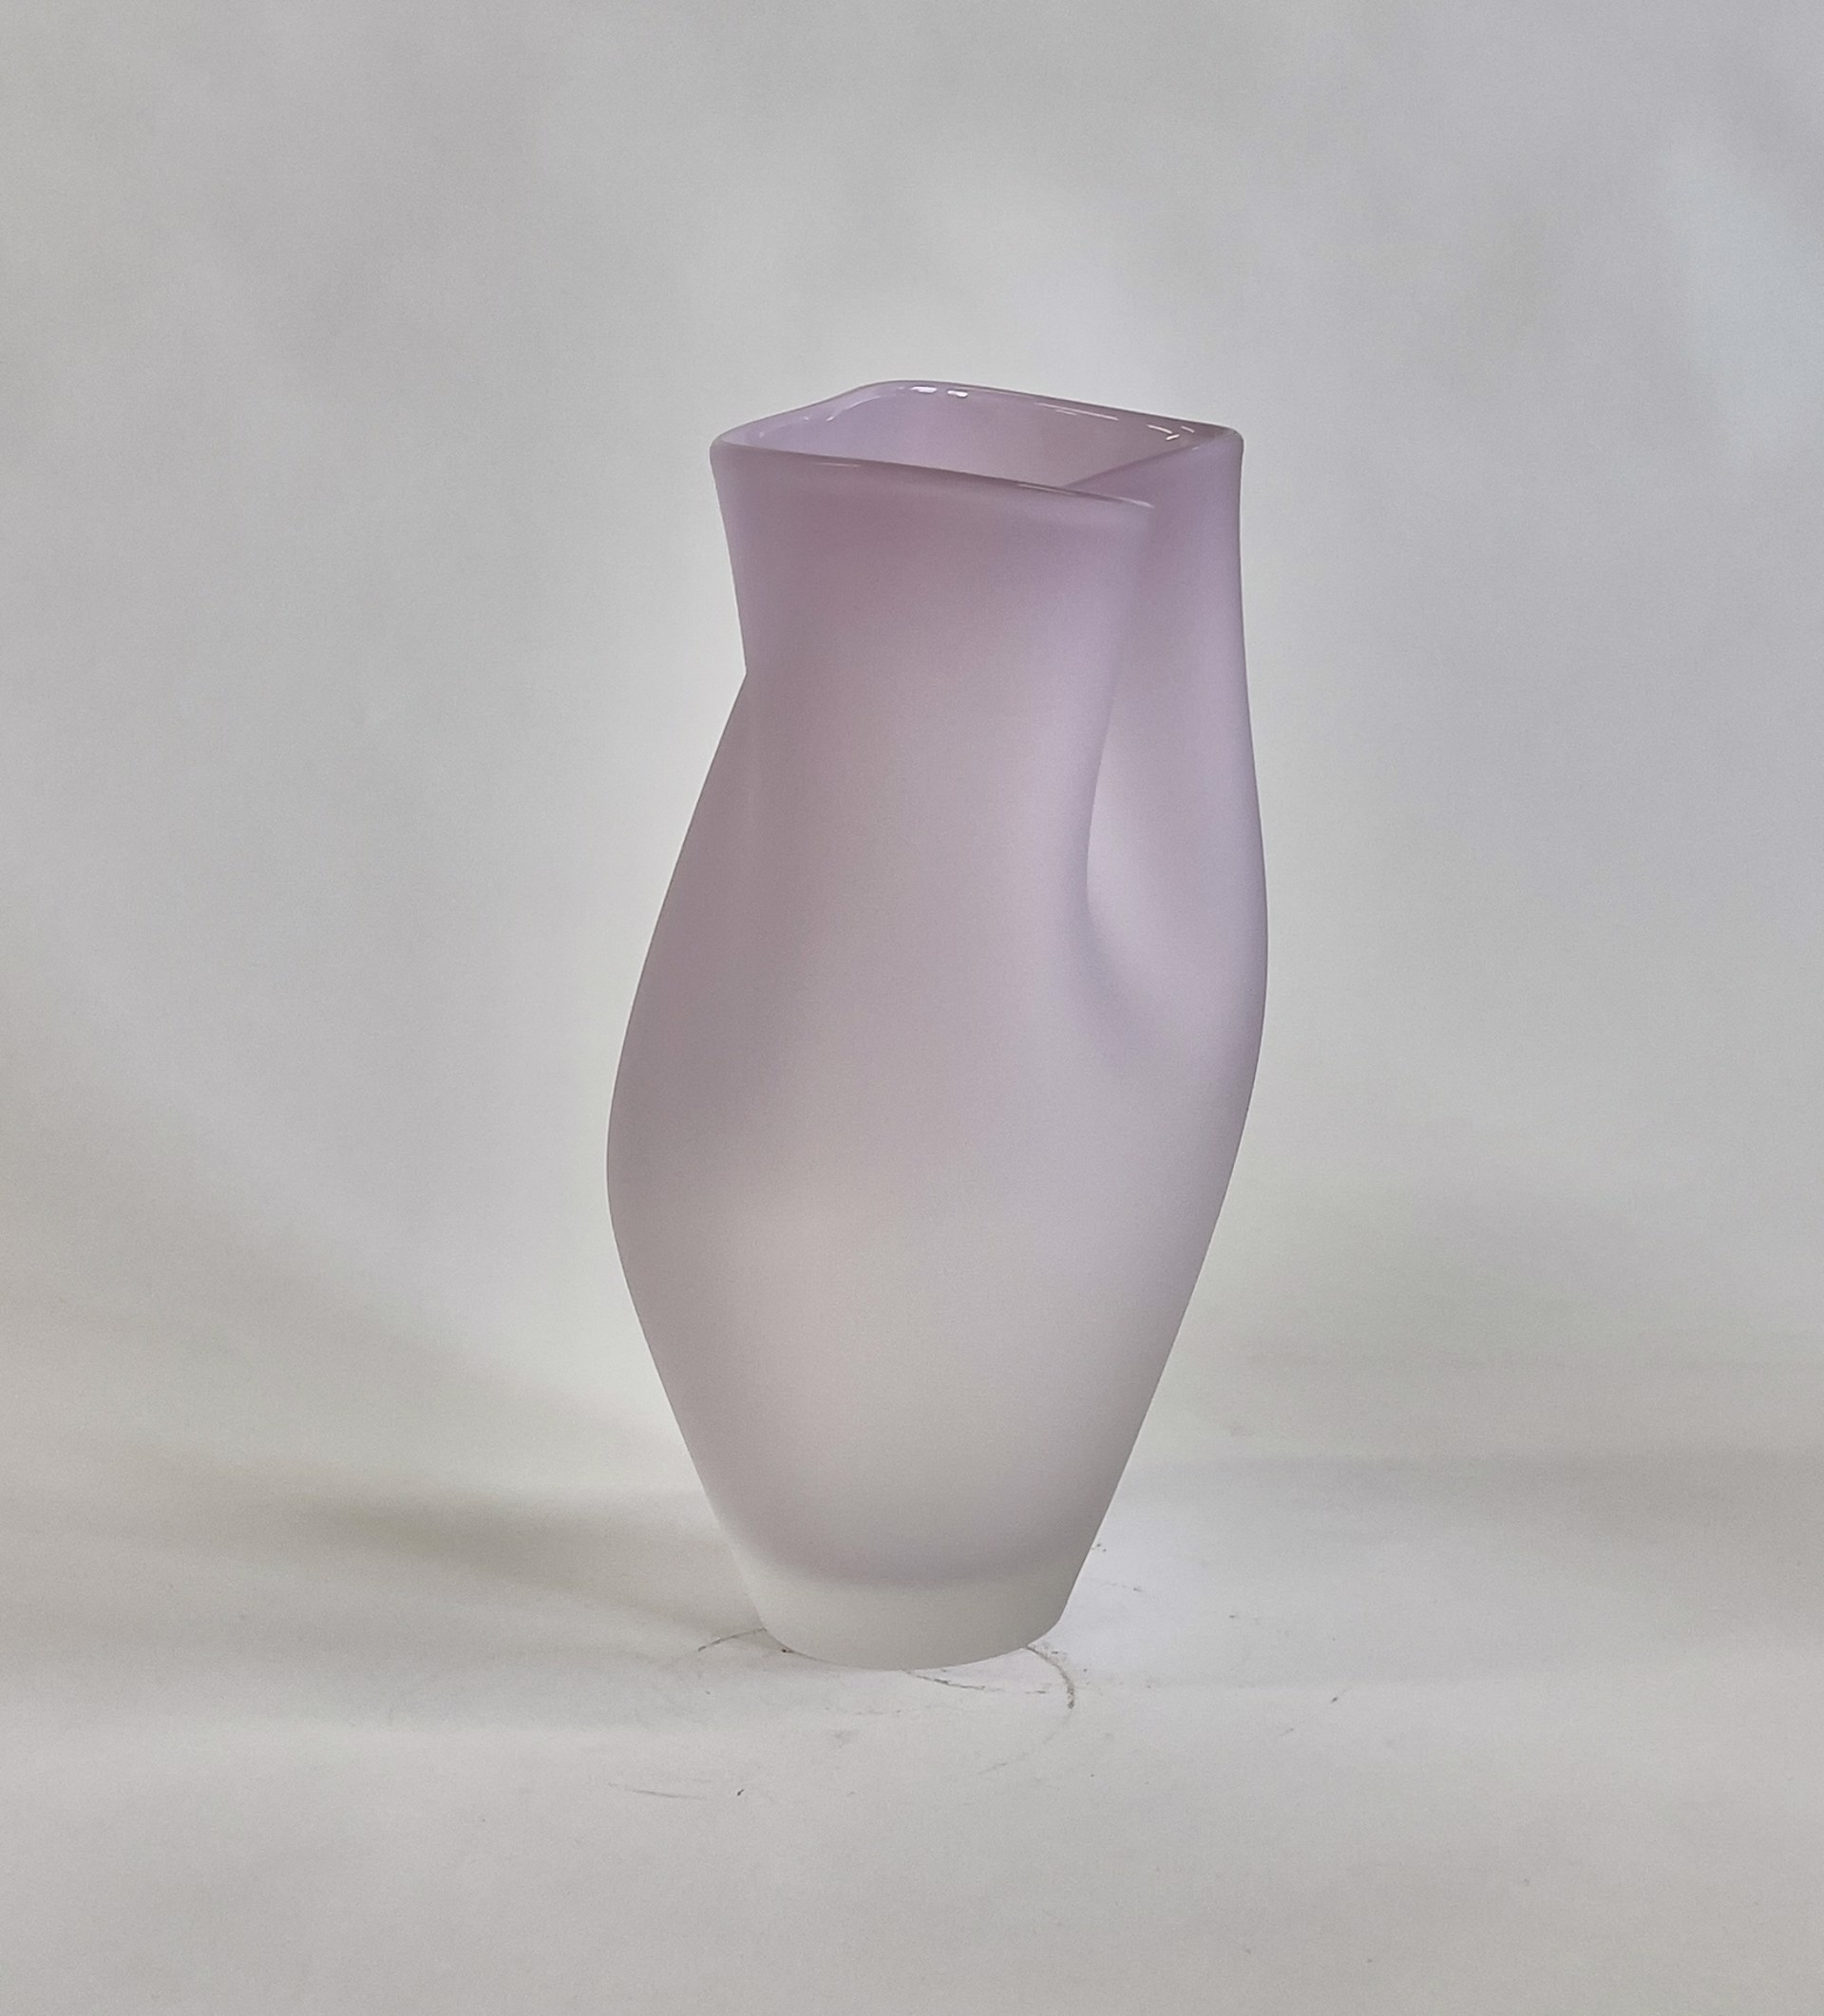 Soft Violet Ovelle by The Goodman Studio